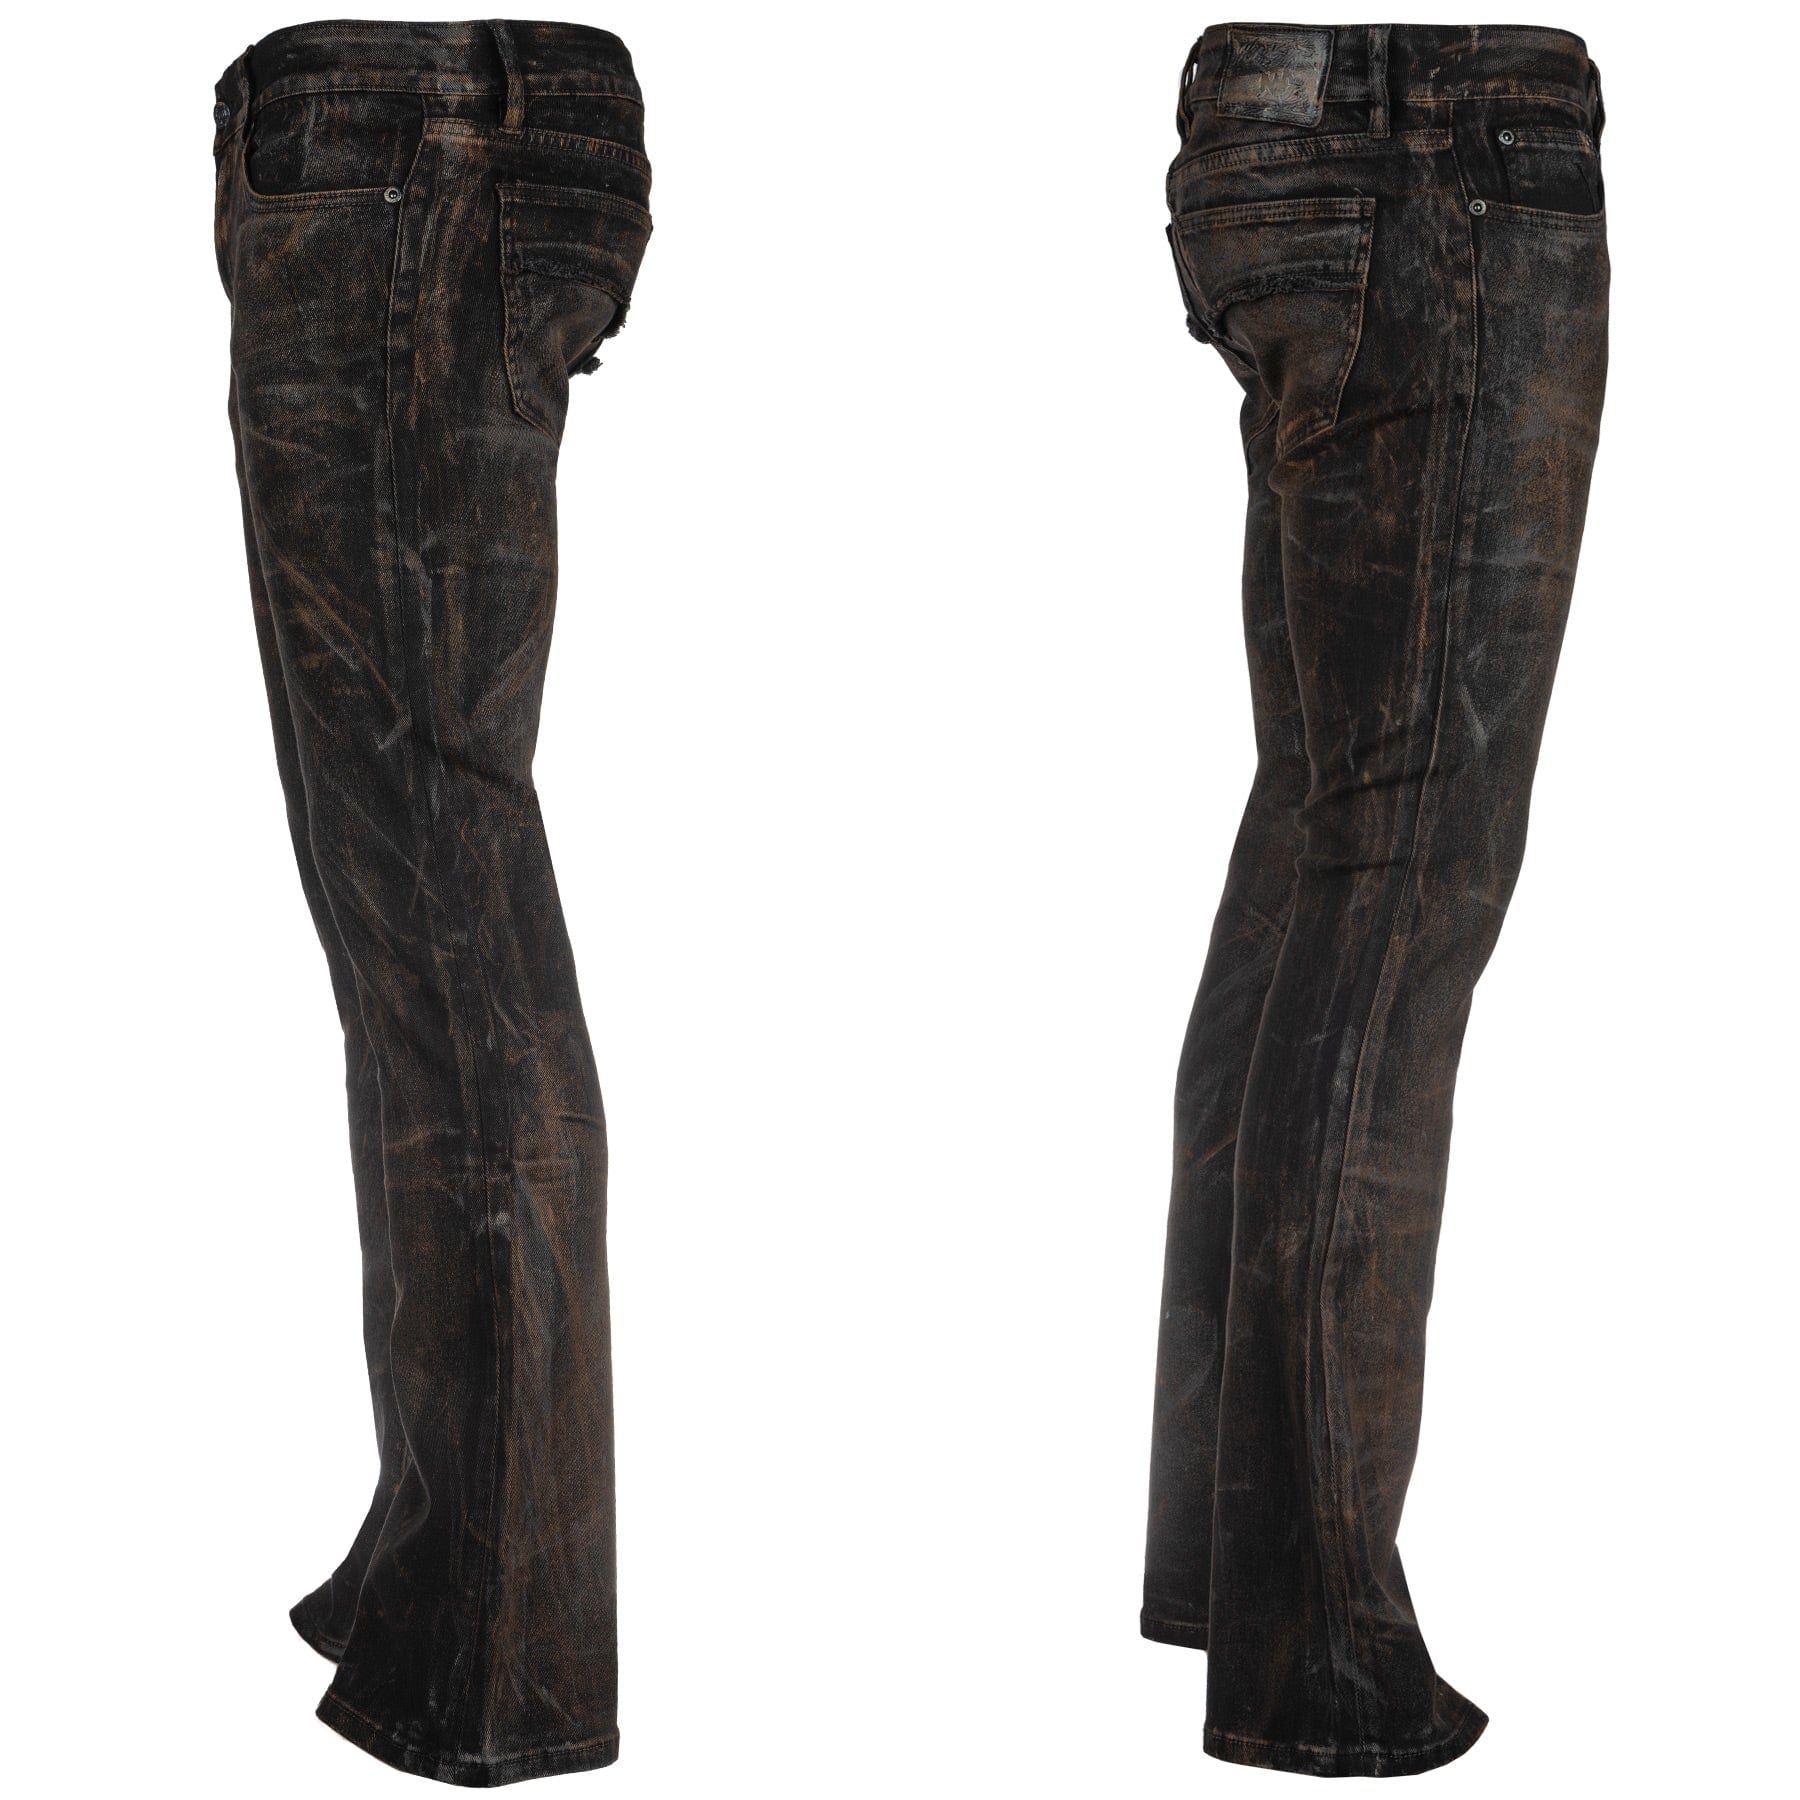 Custom Chop Shop Pants Wornstar Custom Jeans - Raw Umber Alloy Washed and Smoke Washed